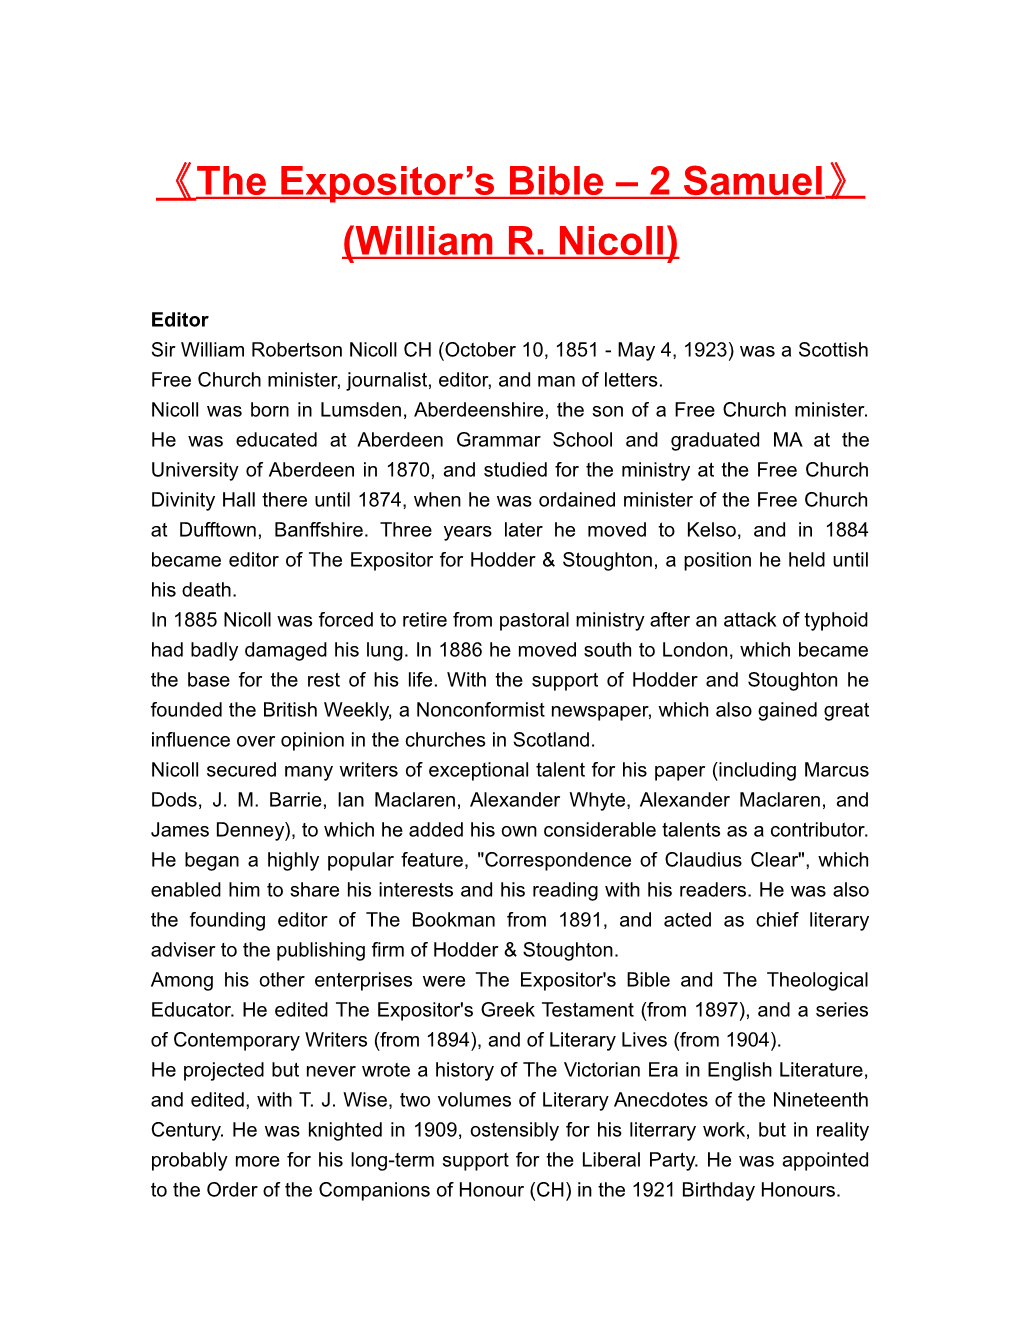 The Expositor S Bible 2 Samuel (William R. Nicoll)